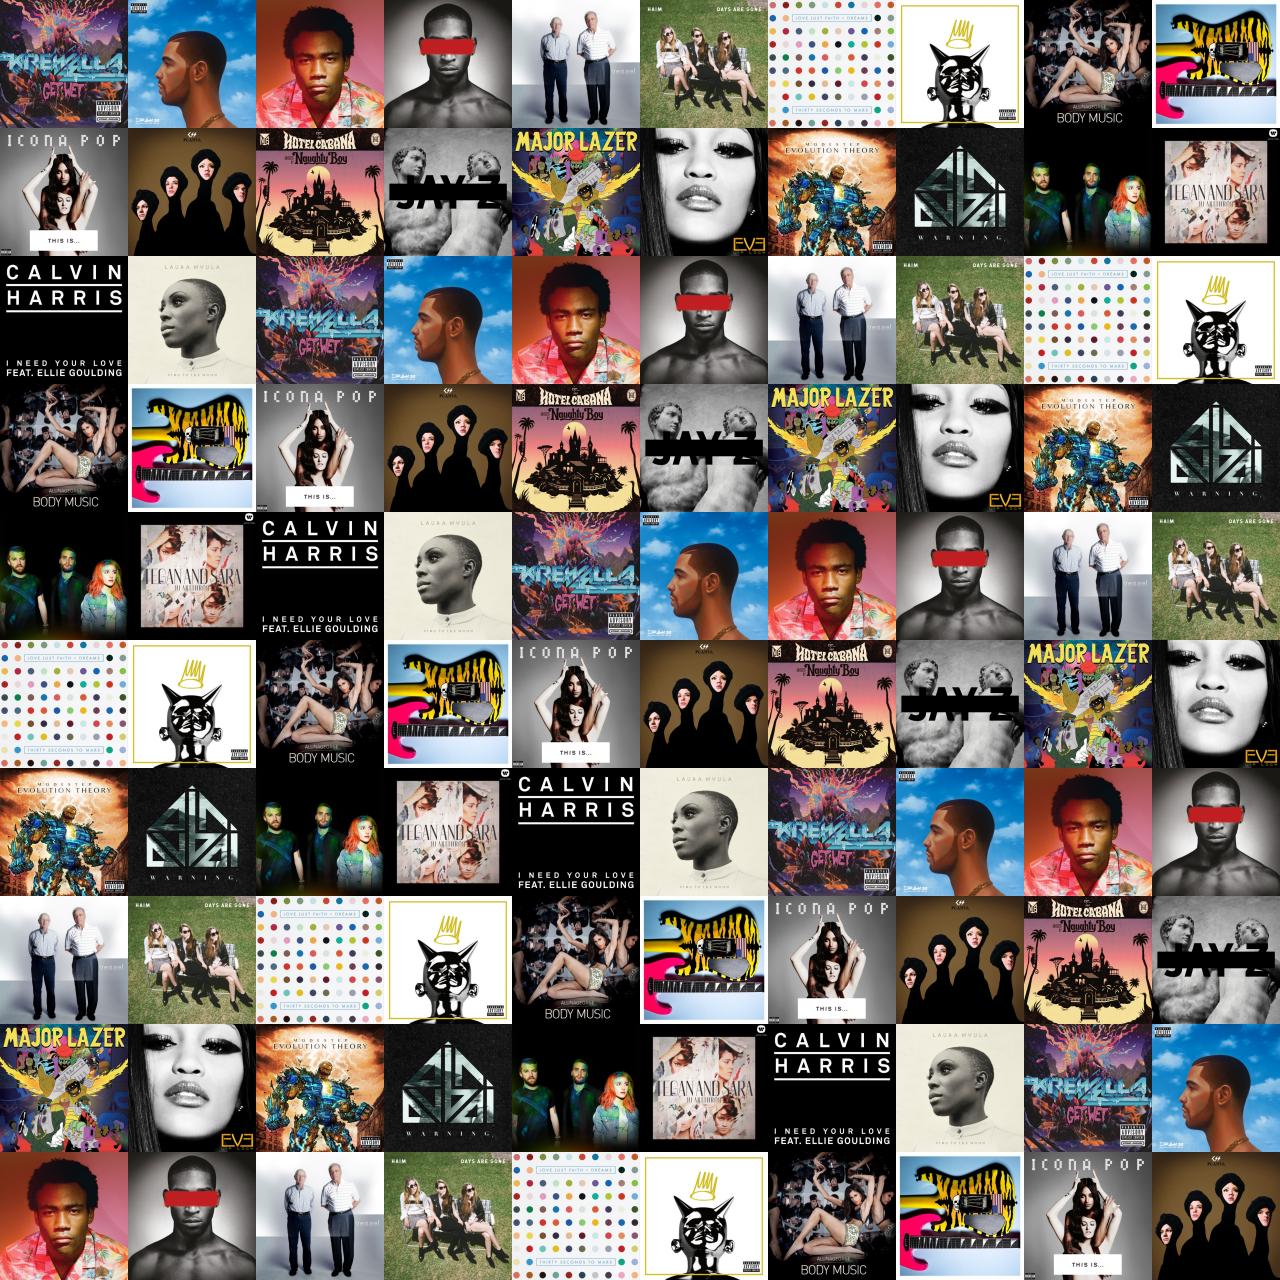 Download Free Album Cover Background  PixelsTalkNet